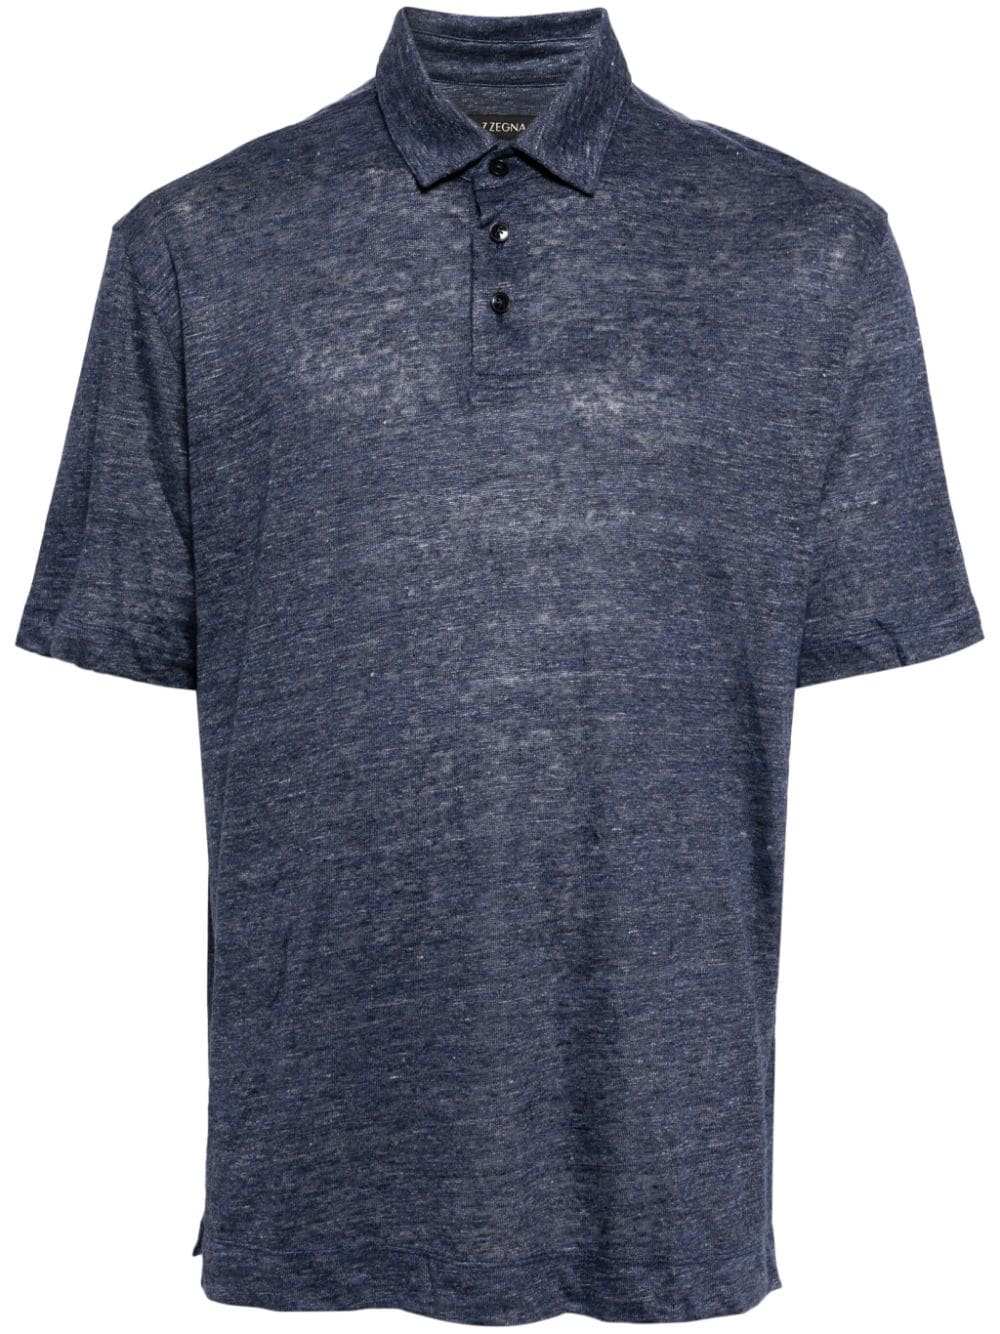 Zegna short-sleeve linen polo shirt - Blue von Zegna